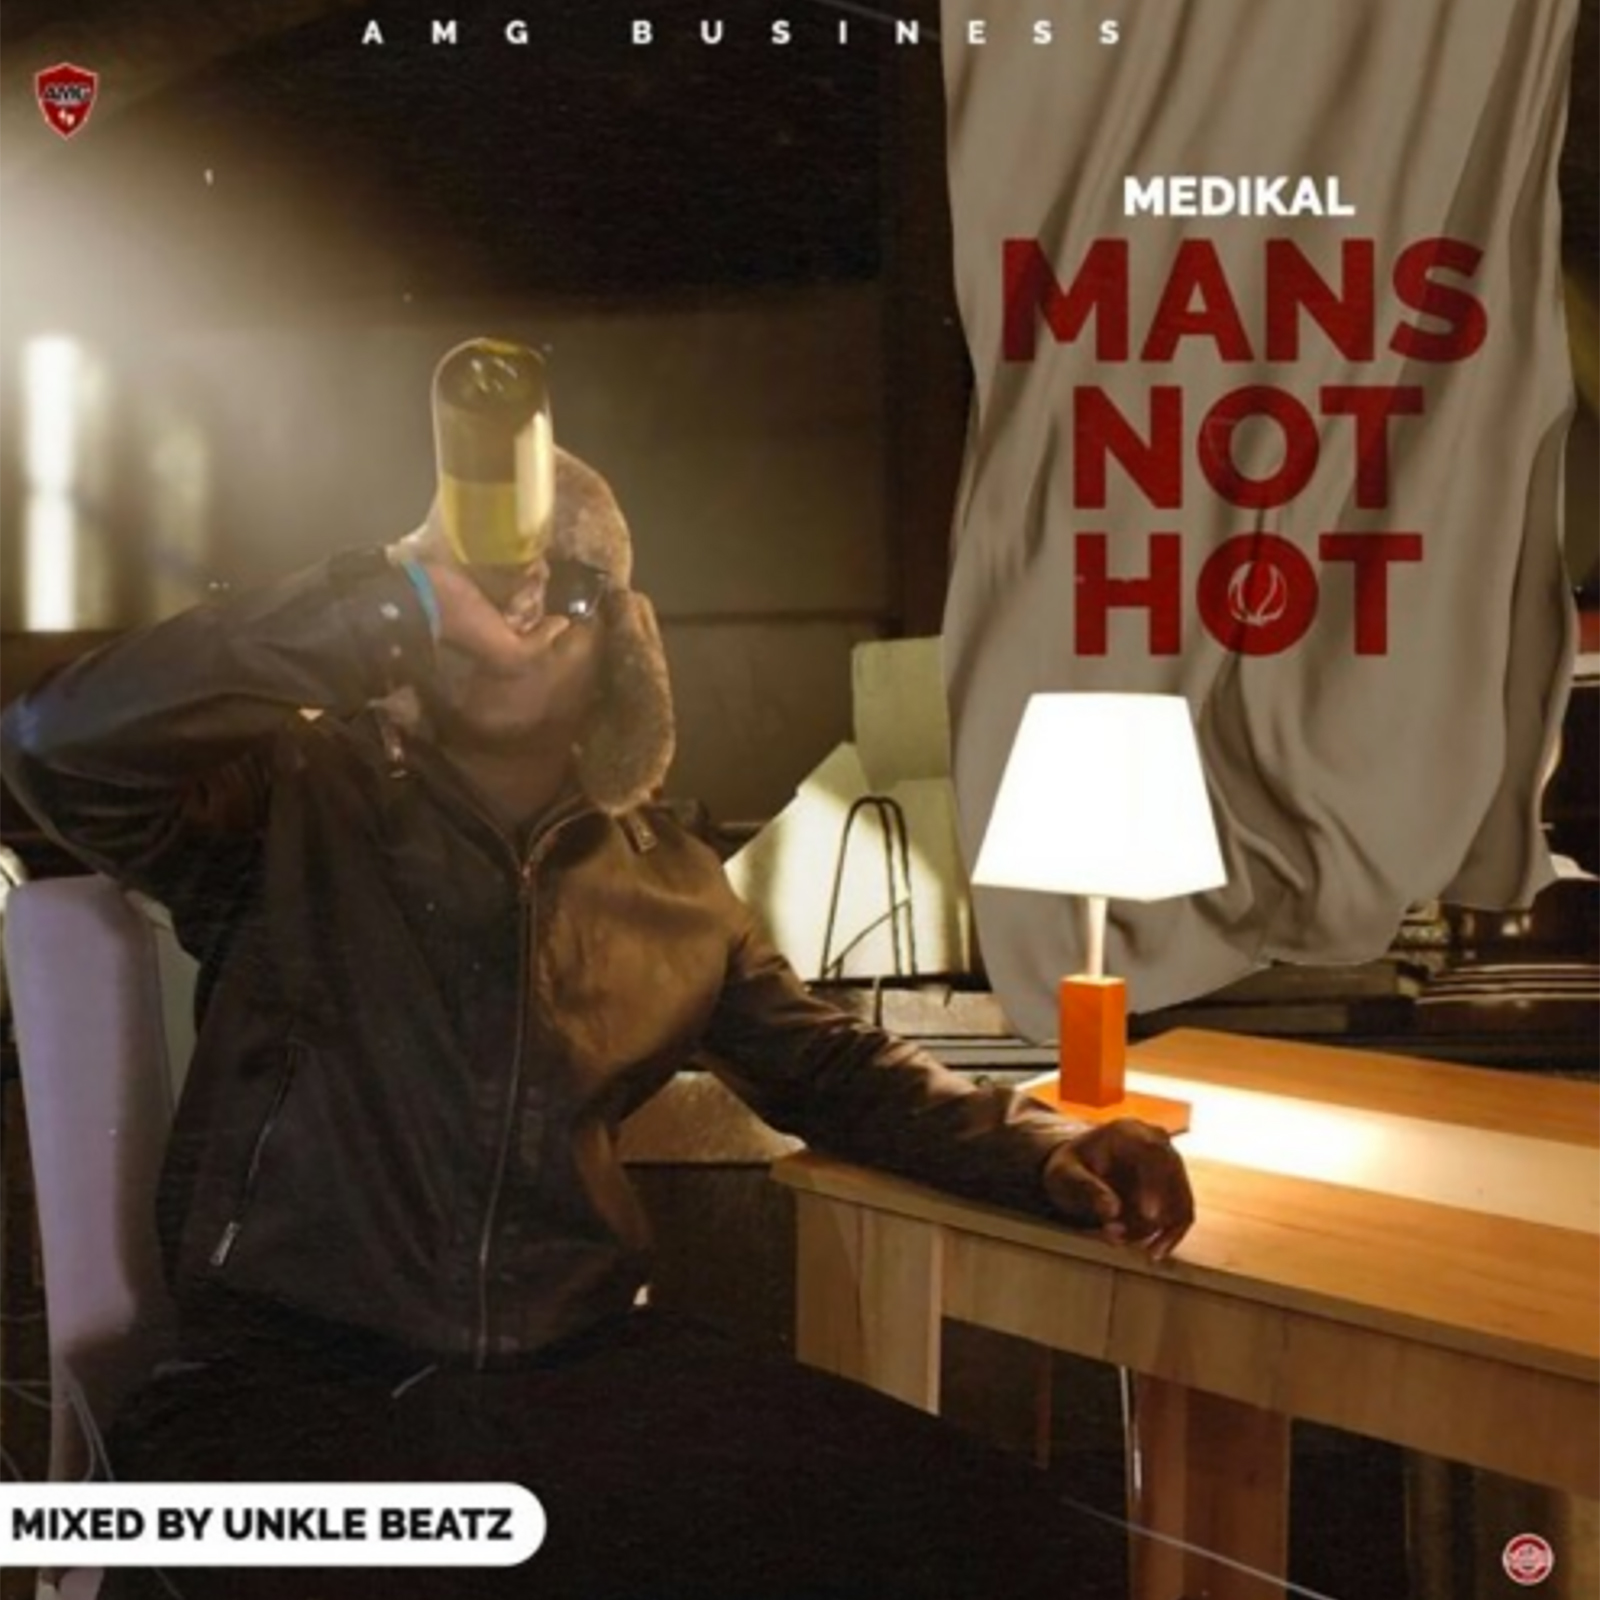 Mans Not Hot by Medikal